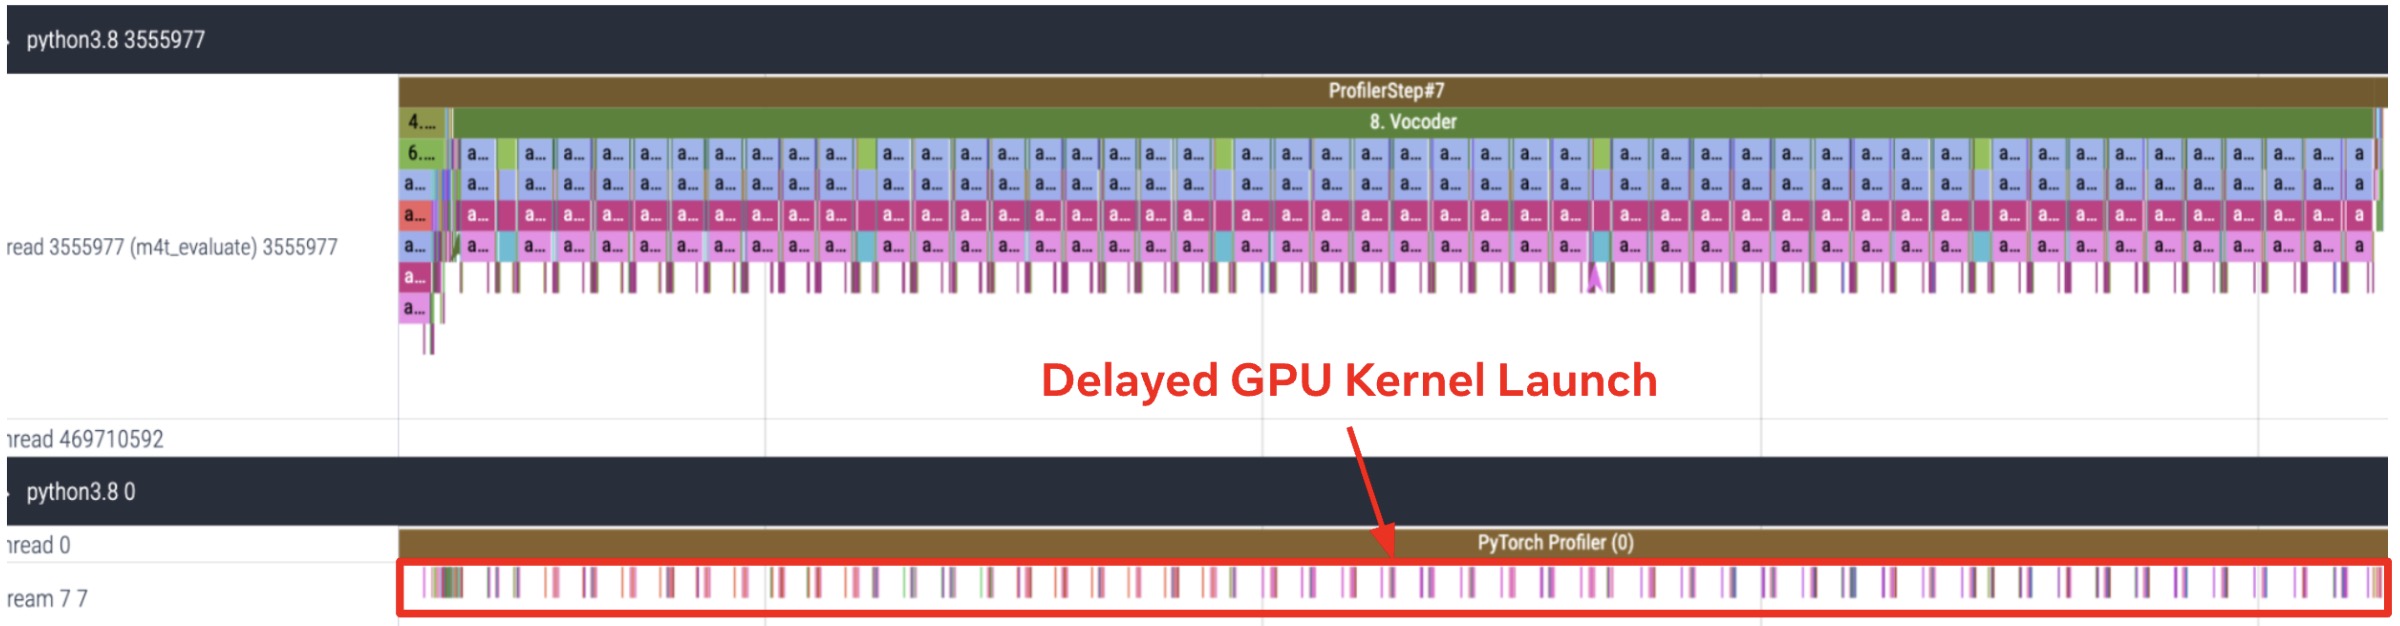 CPU and GPU trace for Vocoder